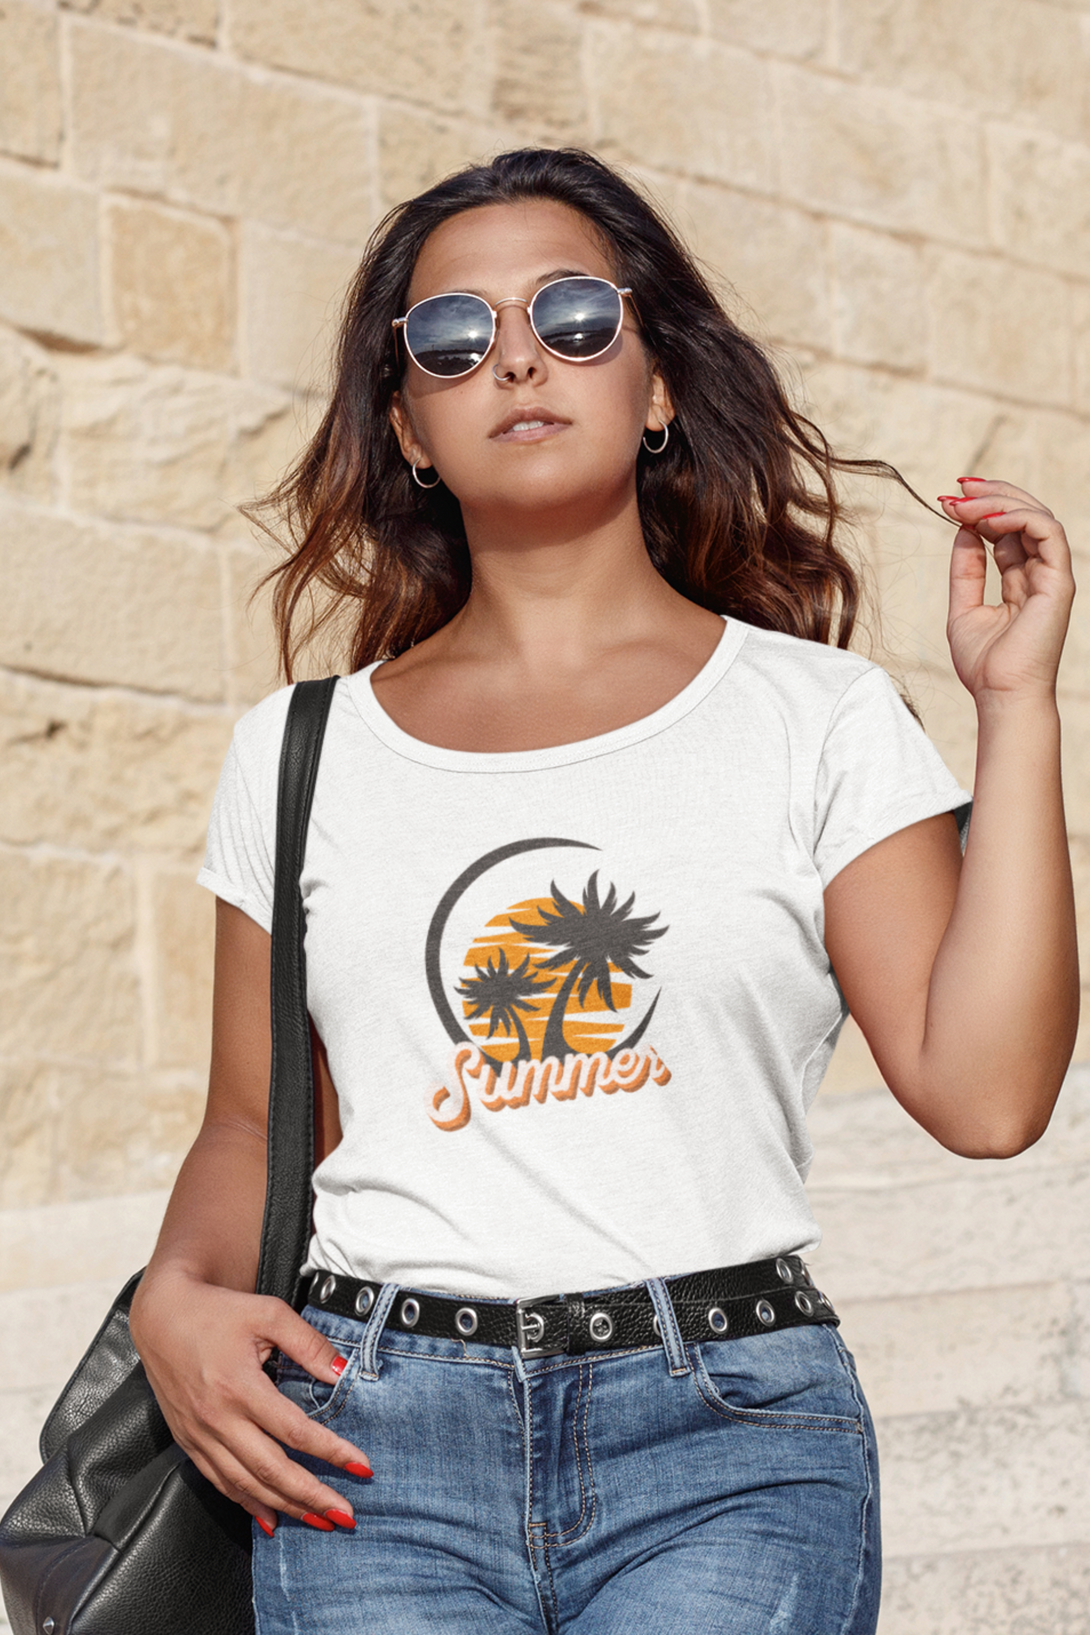 Summer Adventures Printed Scoop Neck T-Shirt For Women - WowWaves - 6